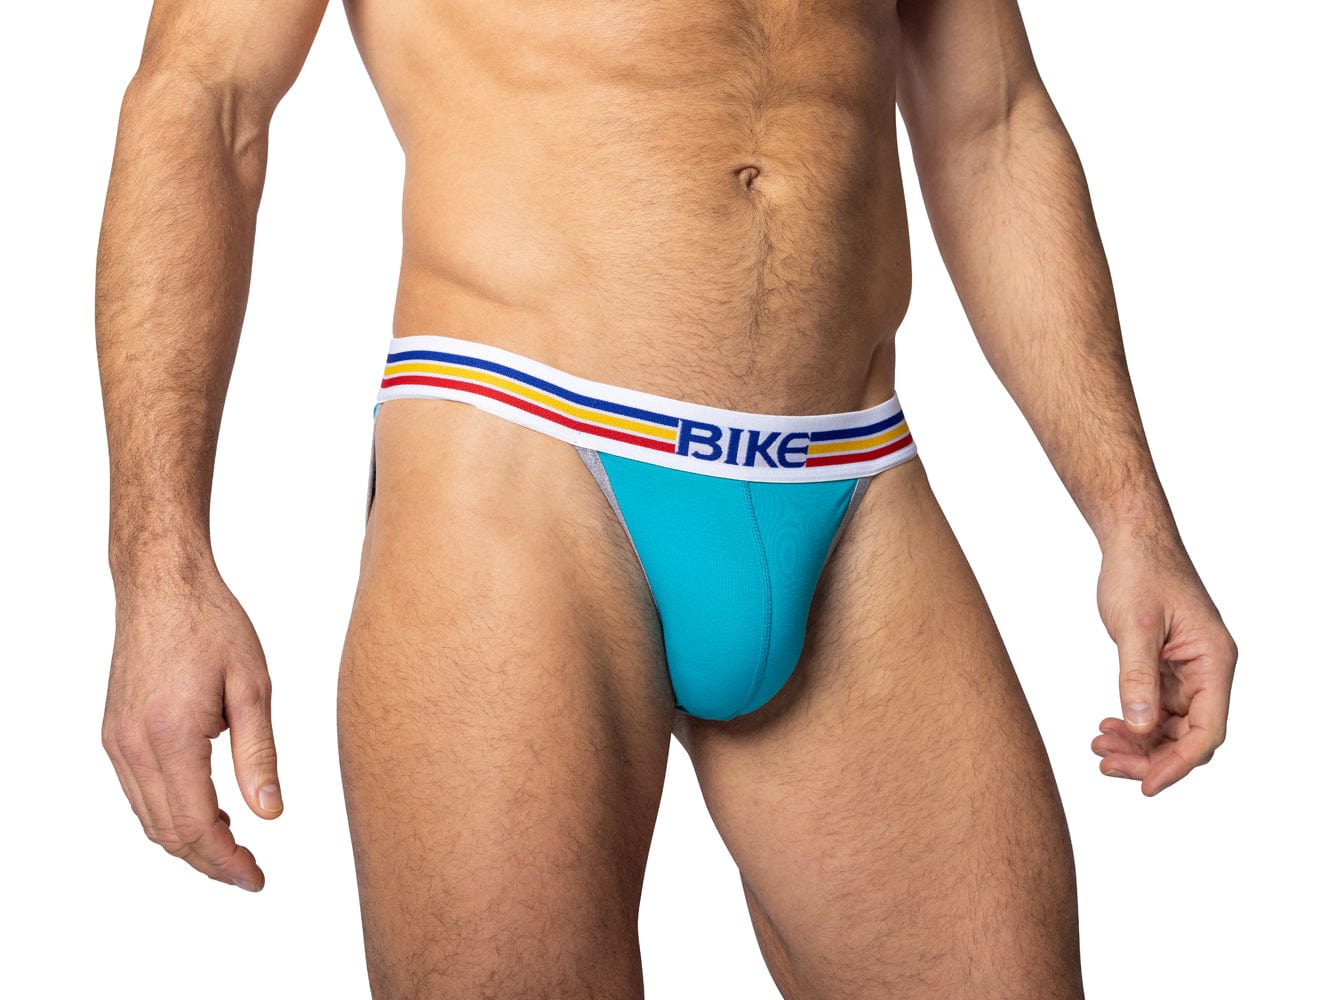 Teal blue Bike Athletic underwear jock briefs